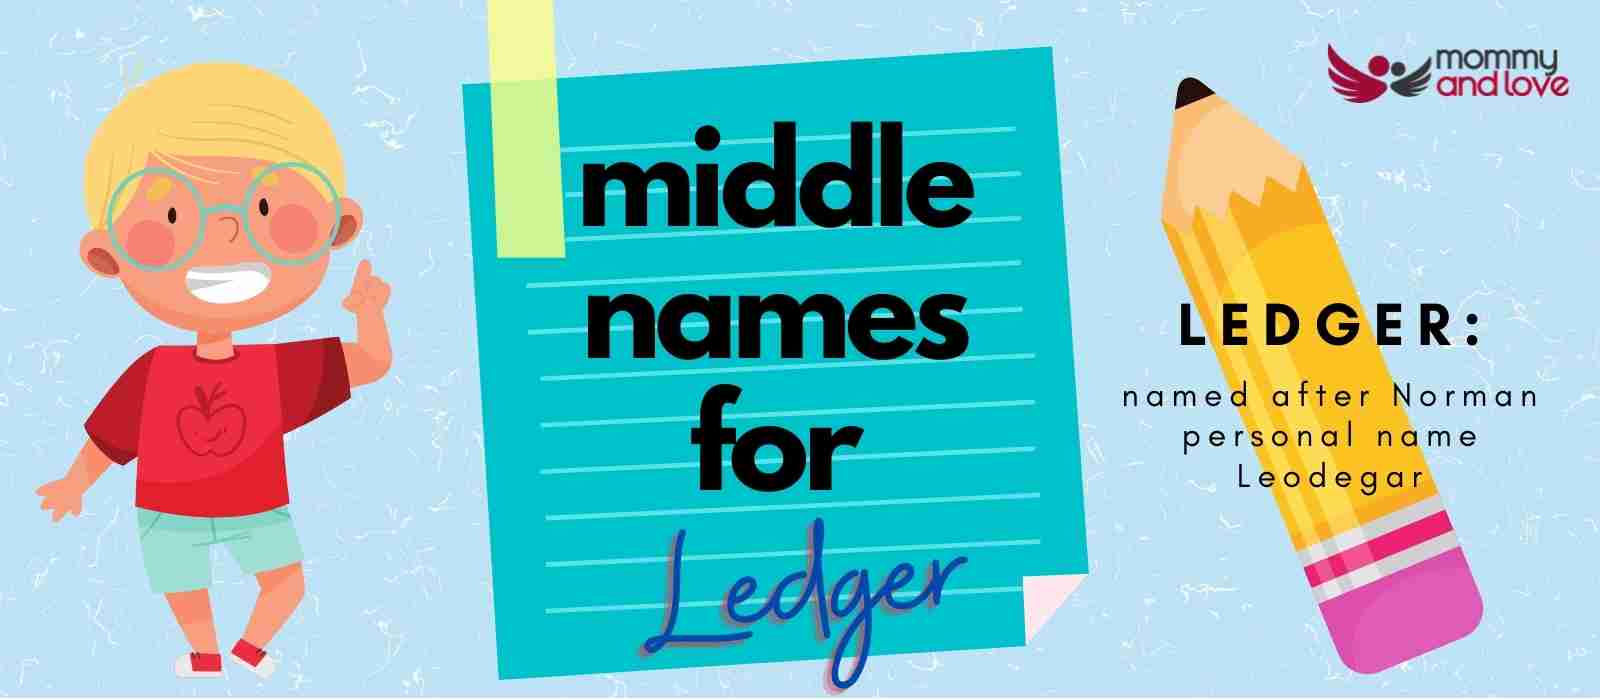 Middle Names for Ledger